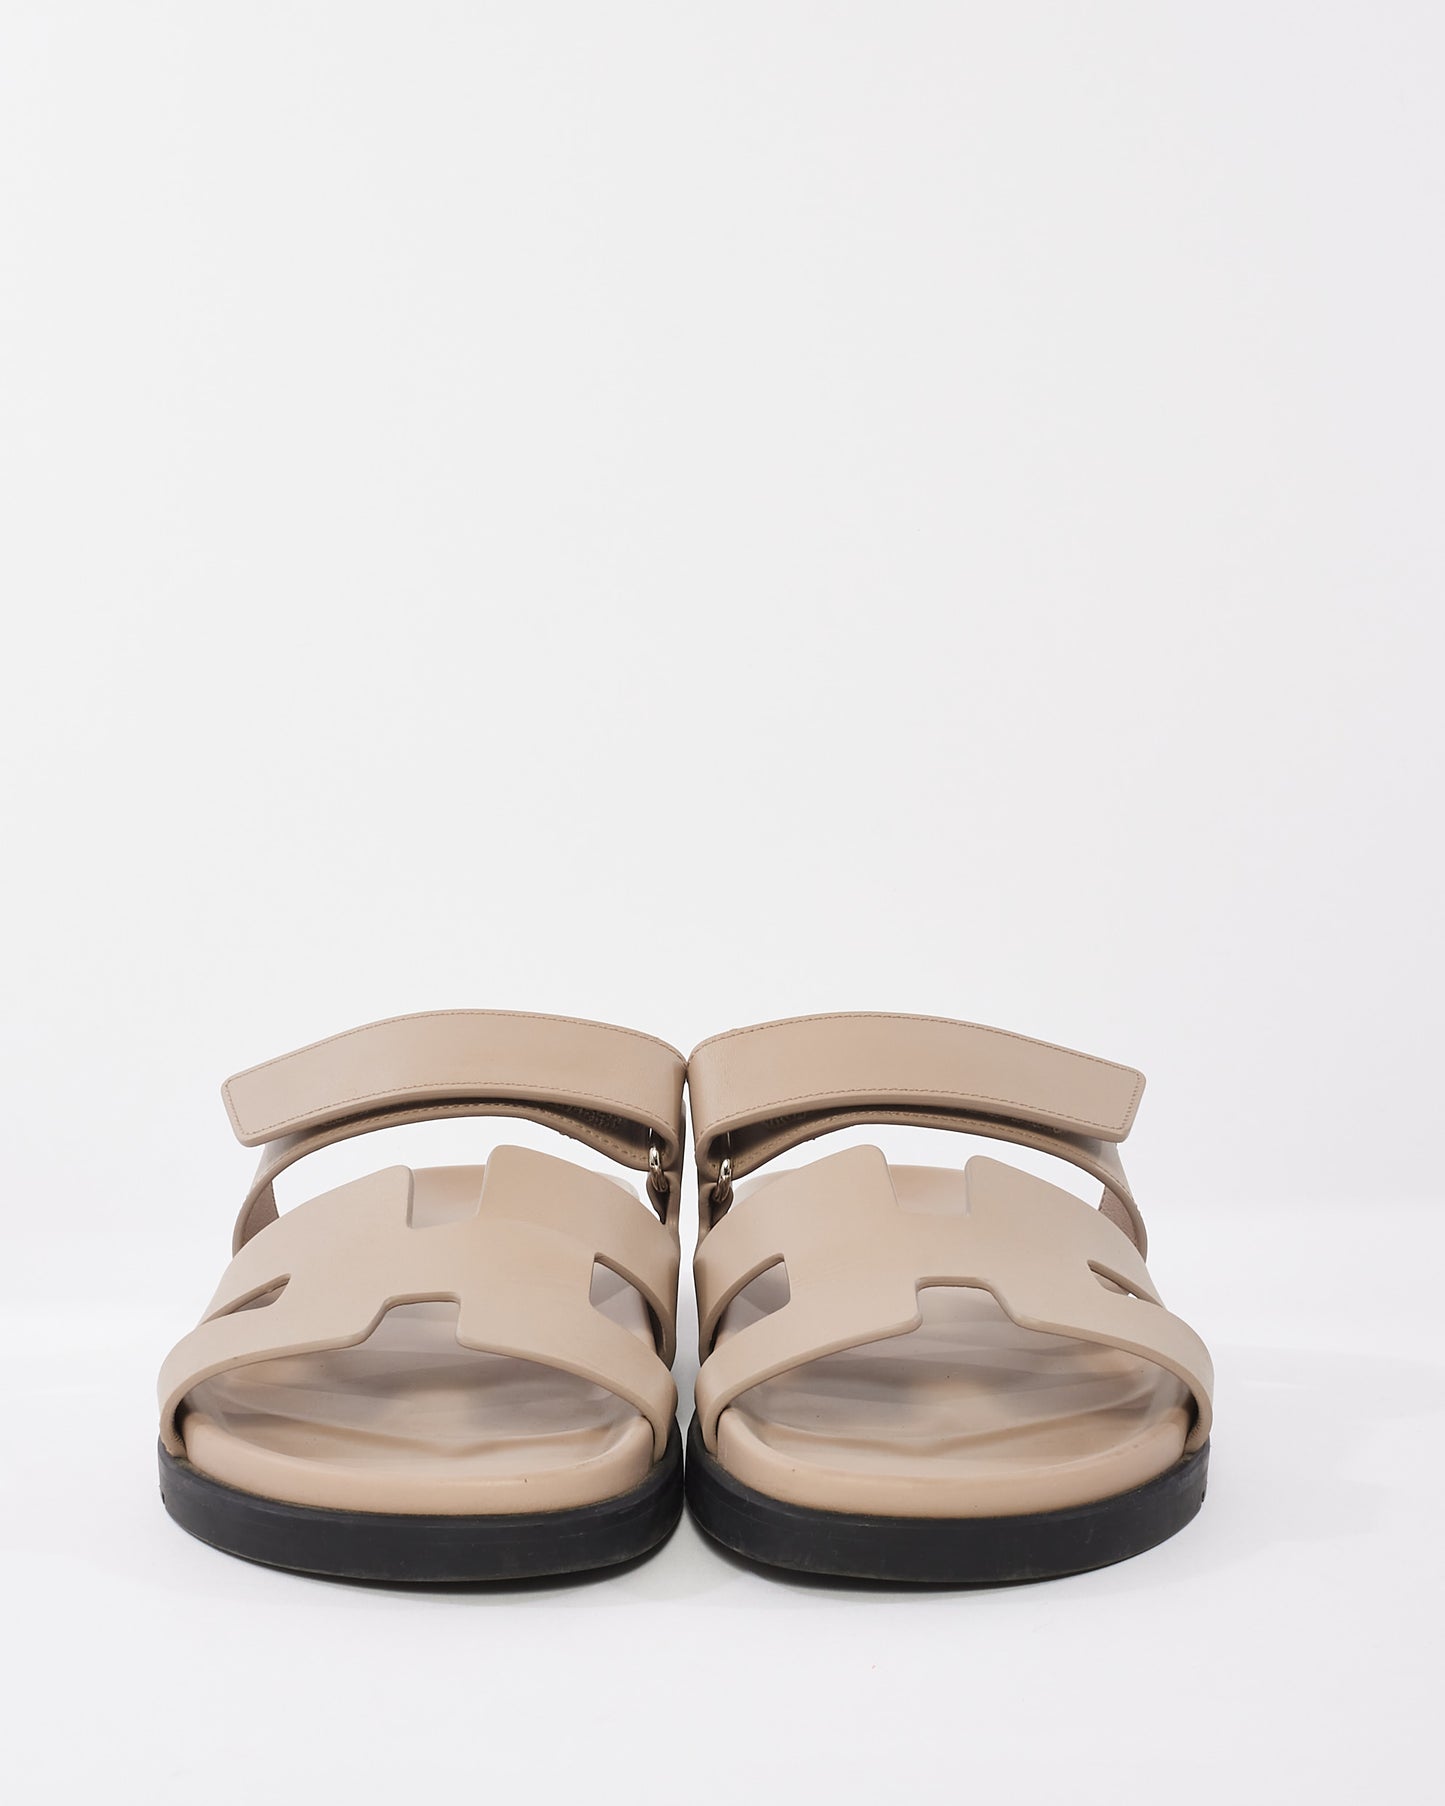 Hermès "Beige Mastic" Leather Chypre Sandals - 39.5